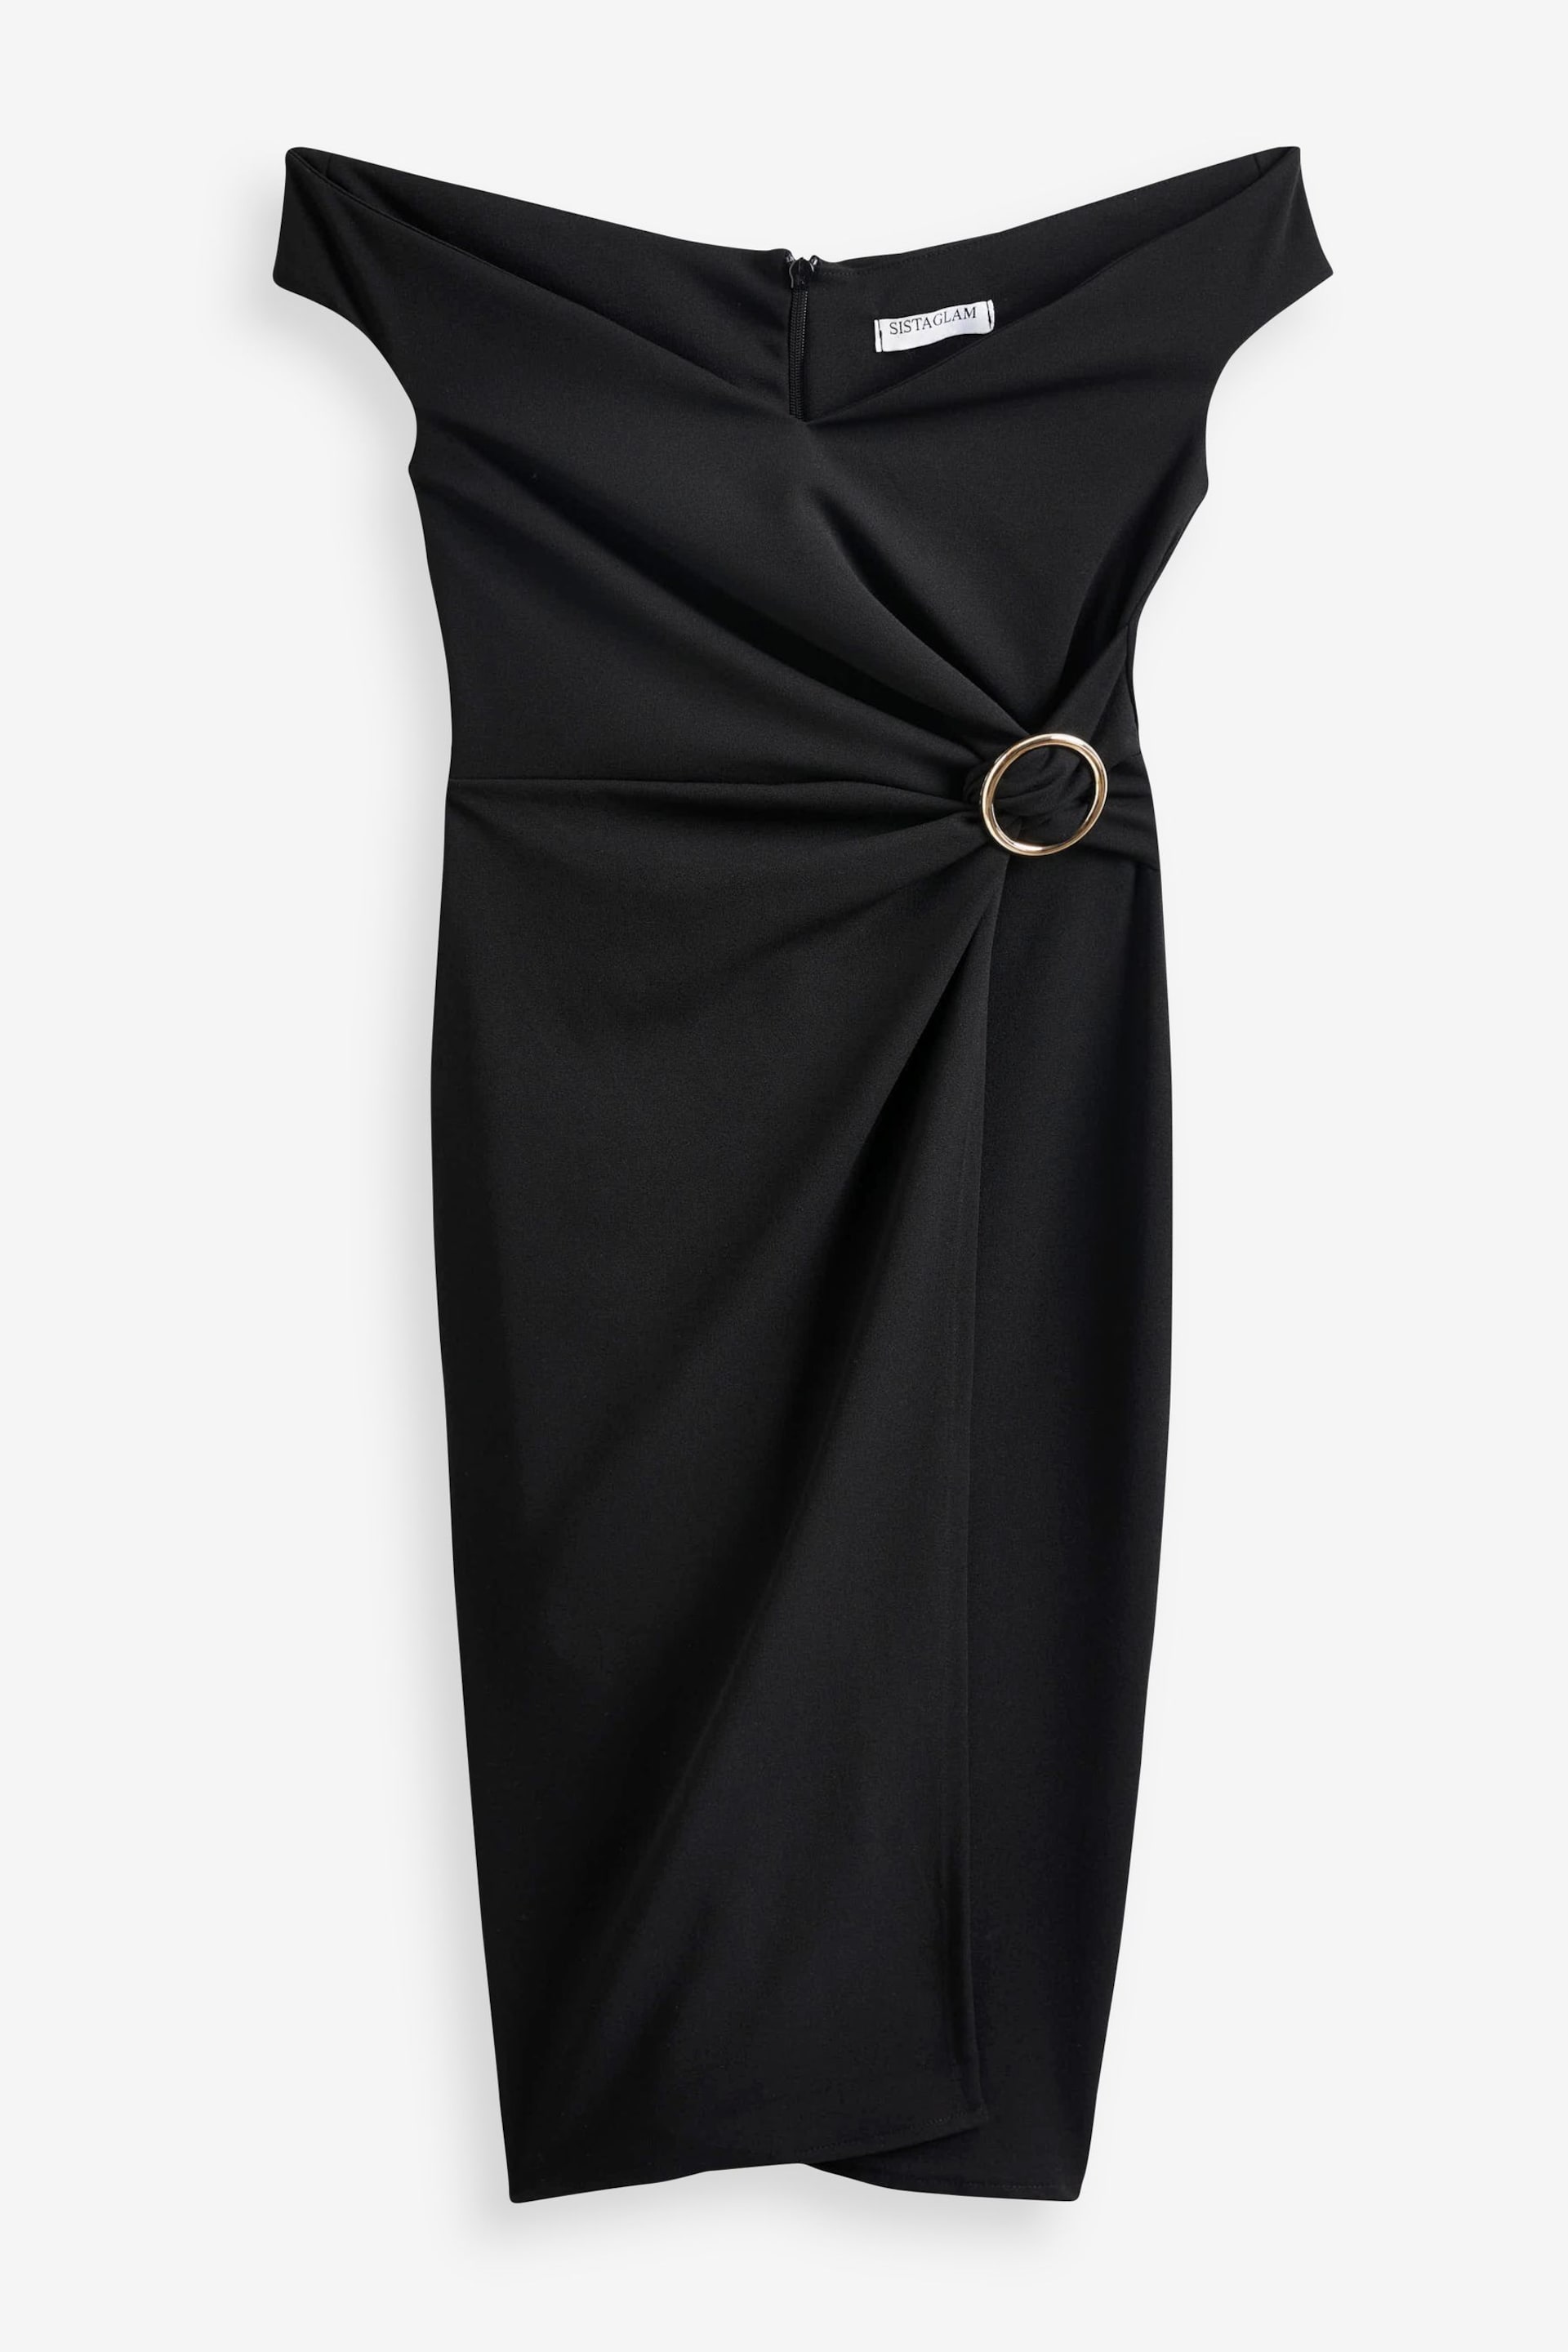 Sistaglam Black Bardot Midi Dress with Belt Detail - Image 5 of 5